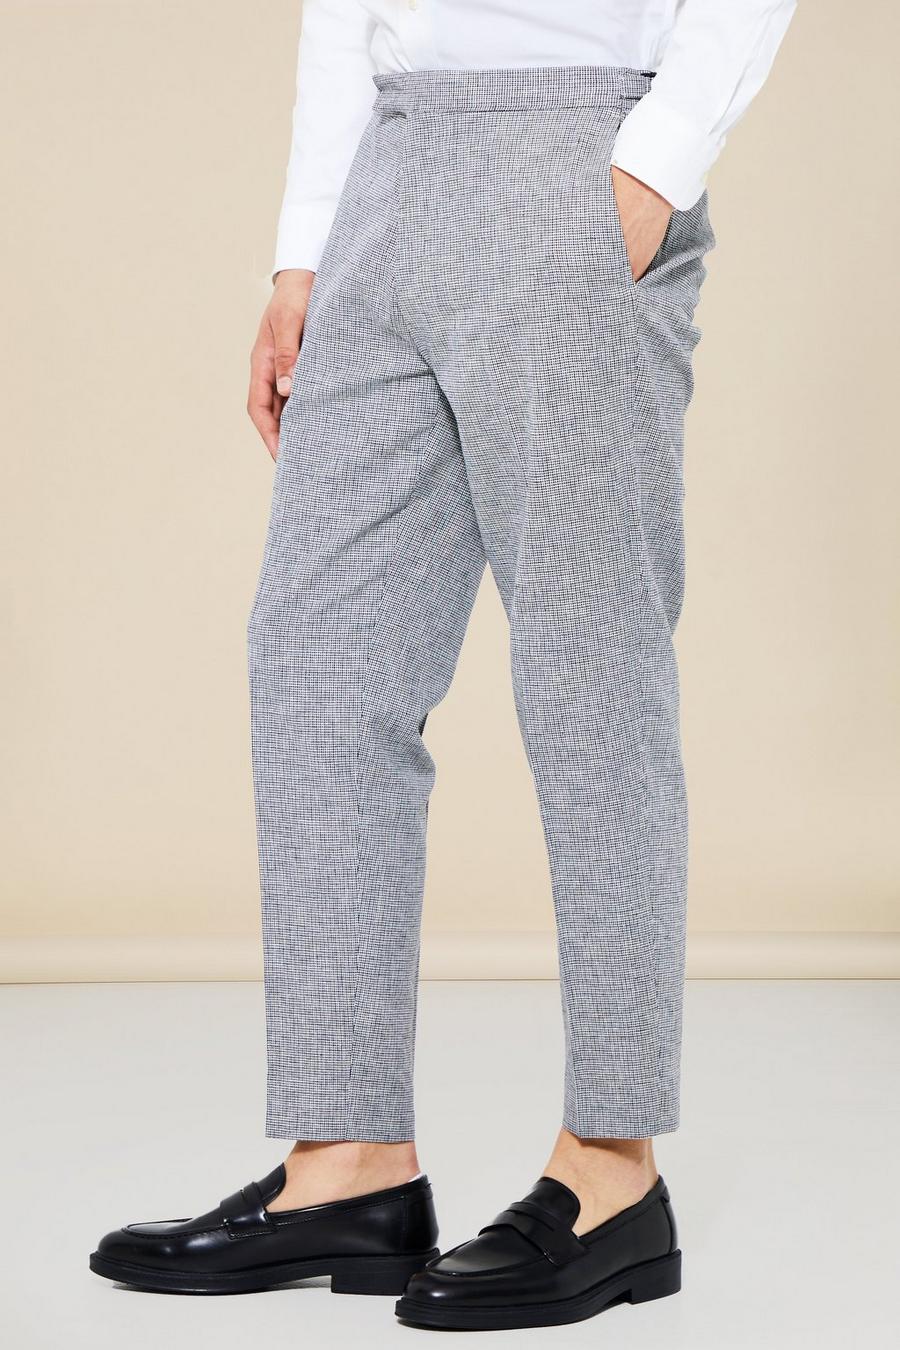 Pantaloni sartoriali Slim Fit con vita regolabile, Light grey grigio